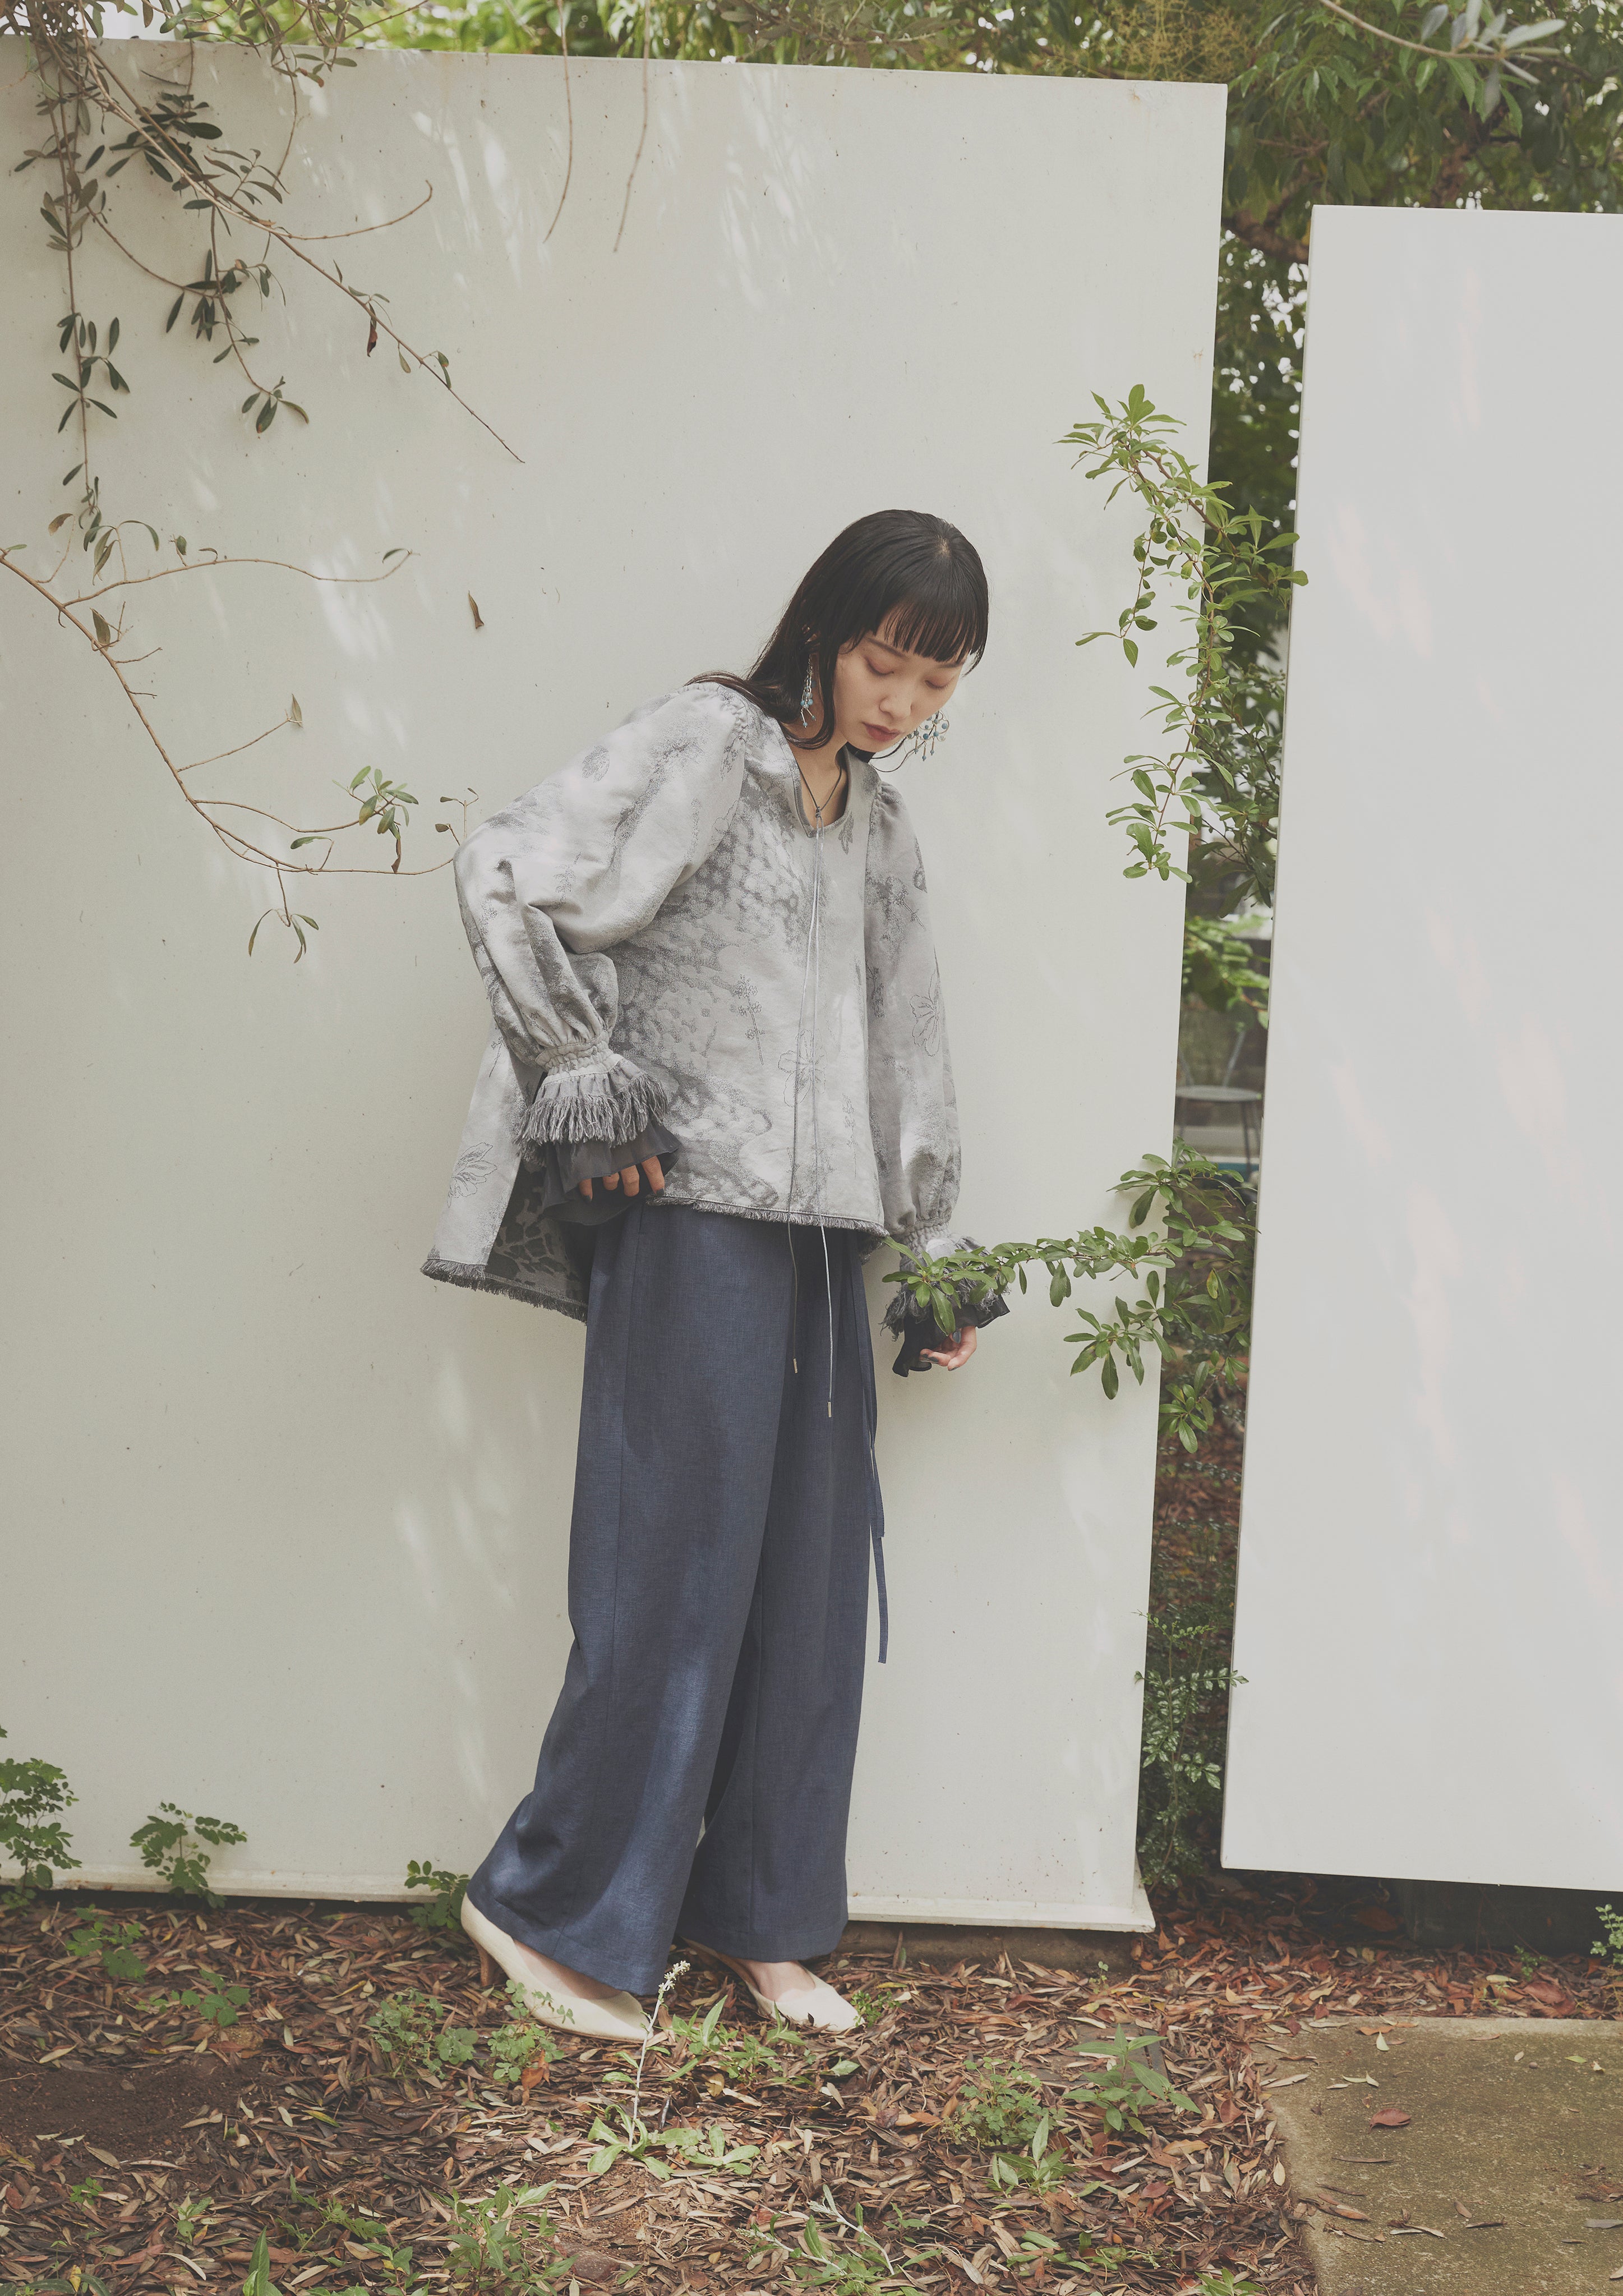 shadow contour jacquard blouse (gray) – nagisa